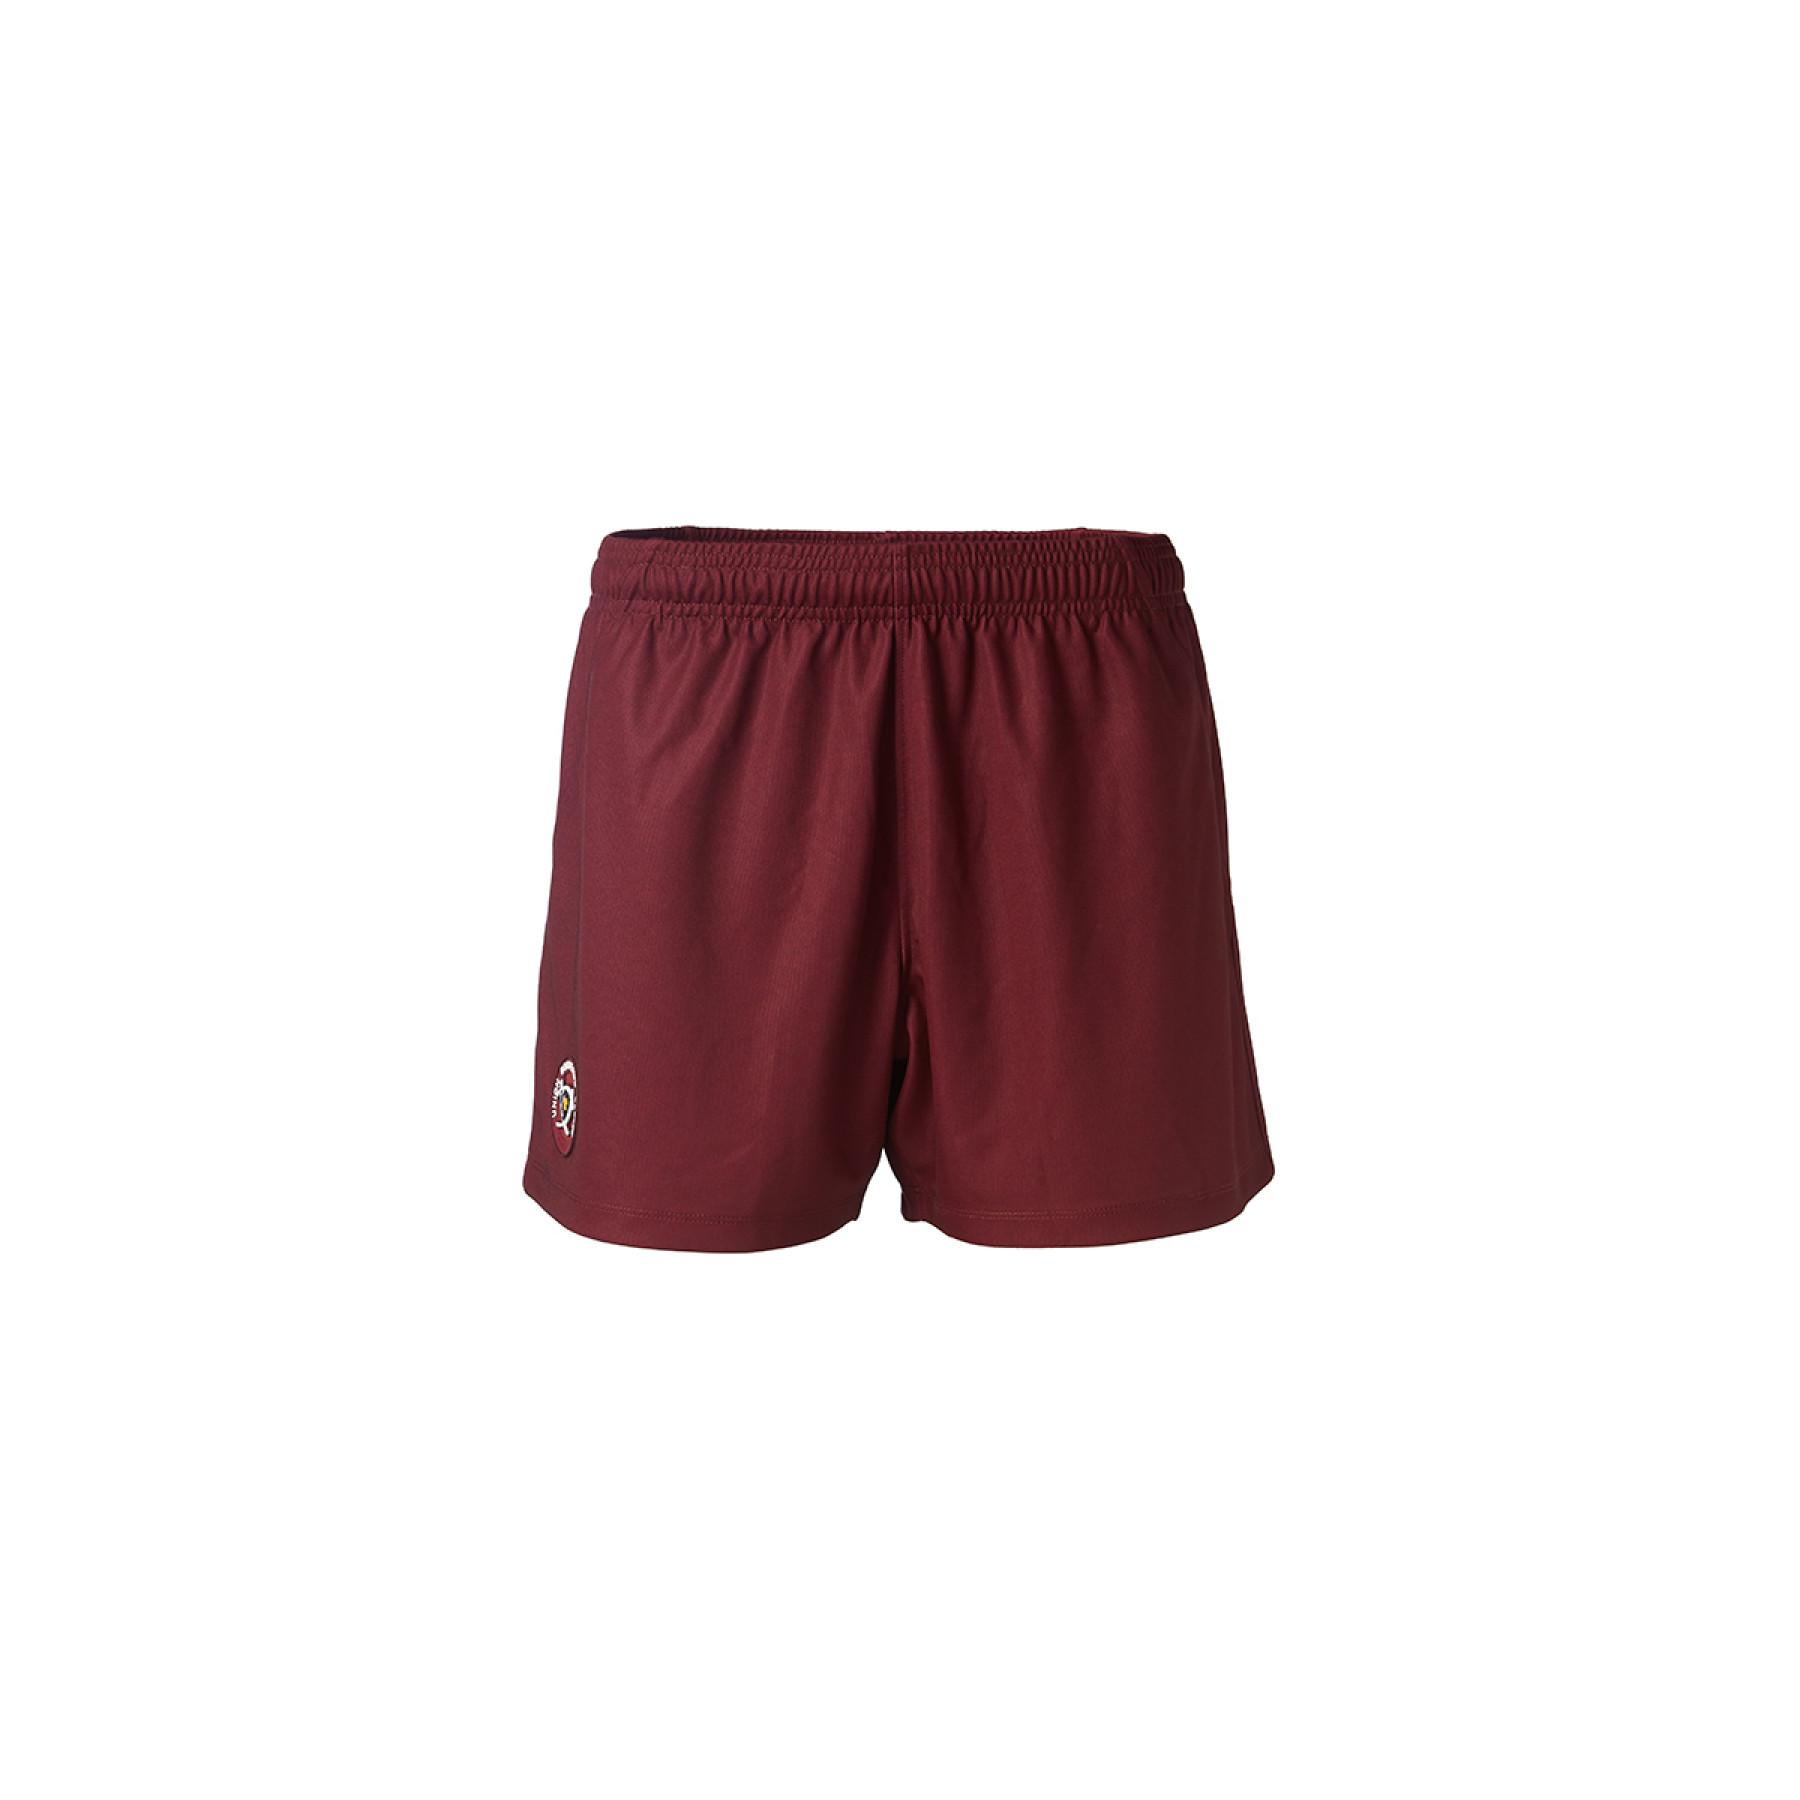 Barnens hem shorts Union Bordeaux-Bègles 2020/21